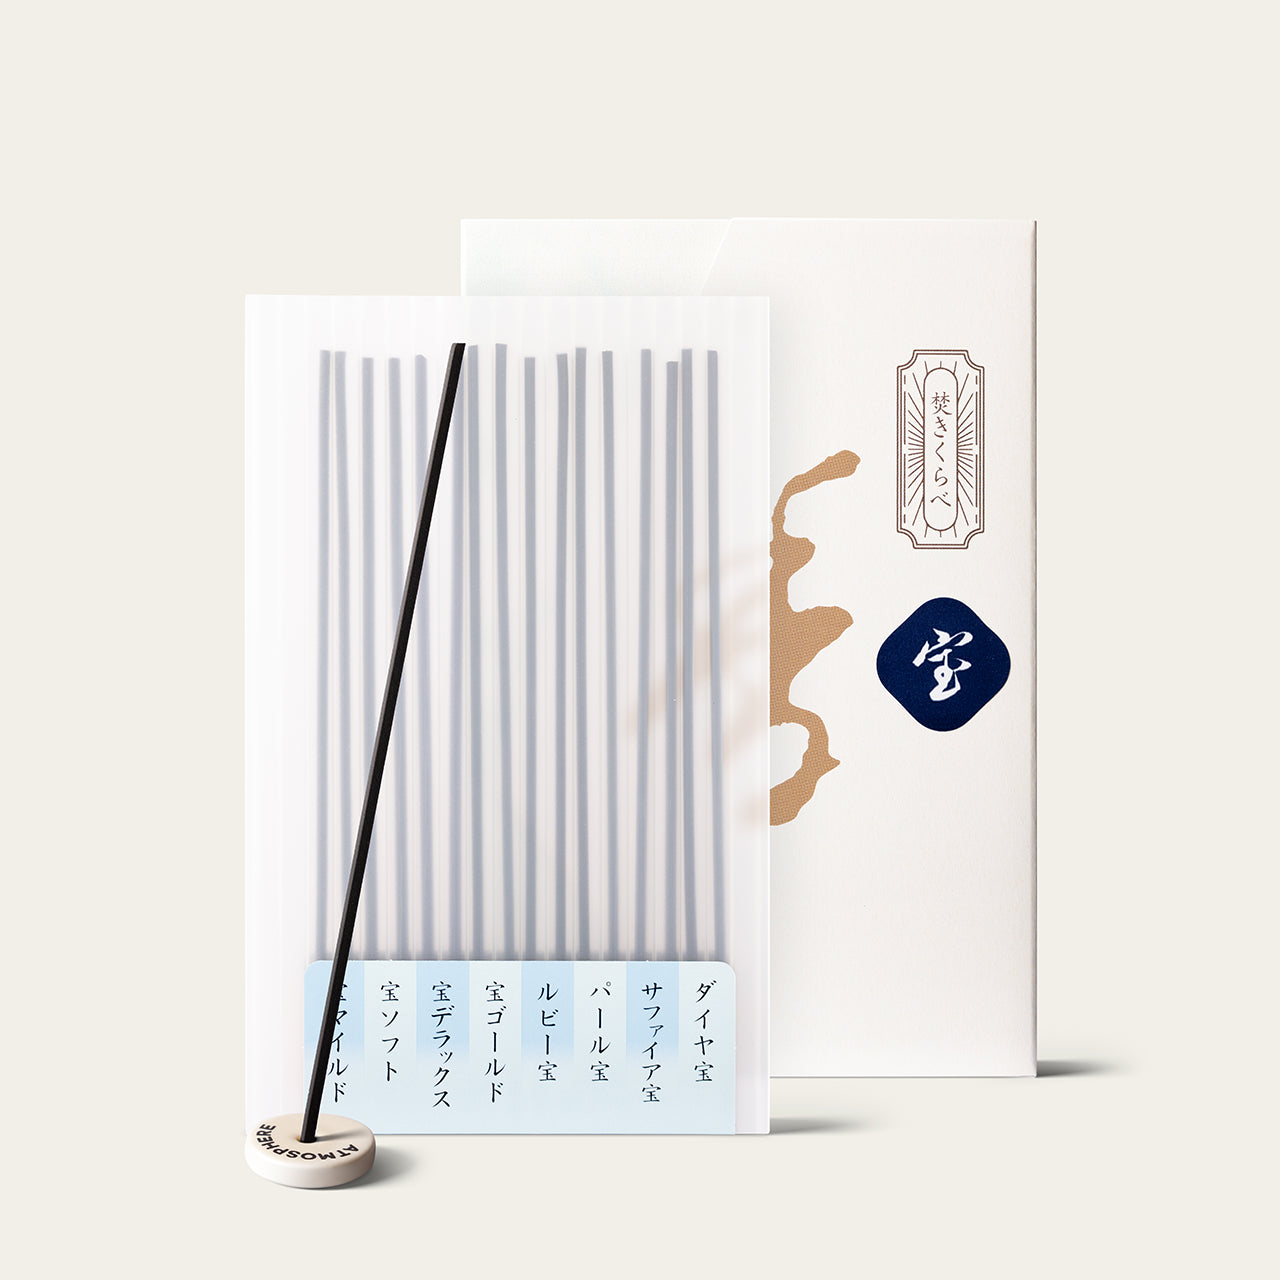 Kunjudo Treasure Takara Discovery Set Japanese incense sticks (16 sticks) with Atmosphere ceramic incense holder